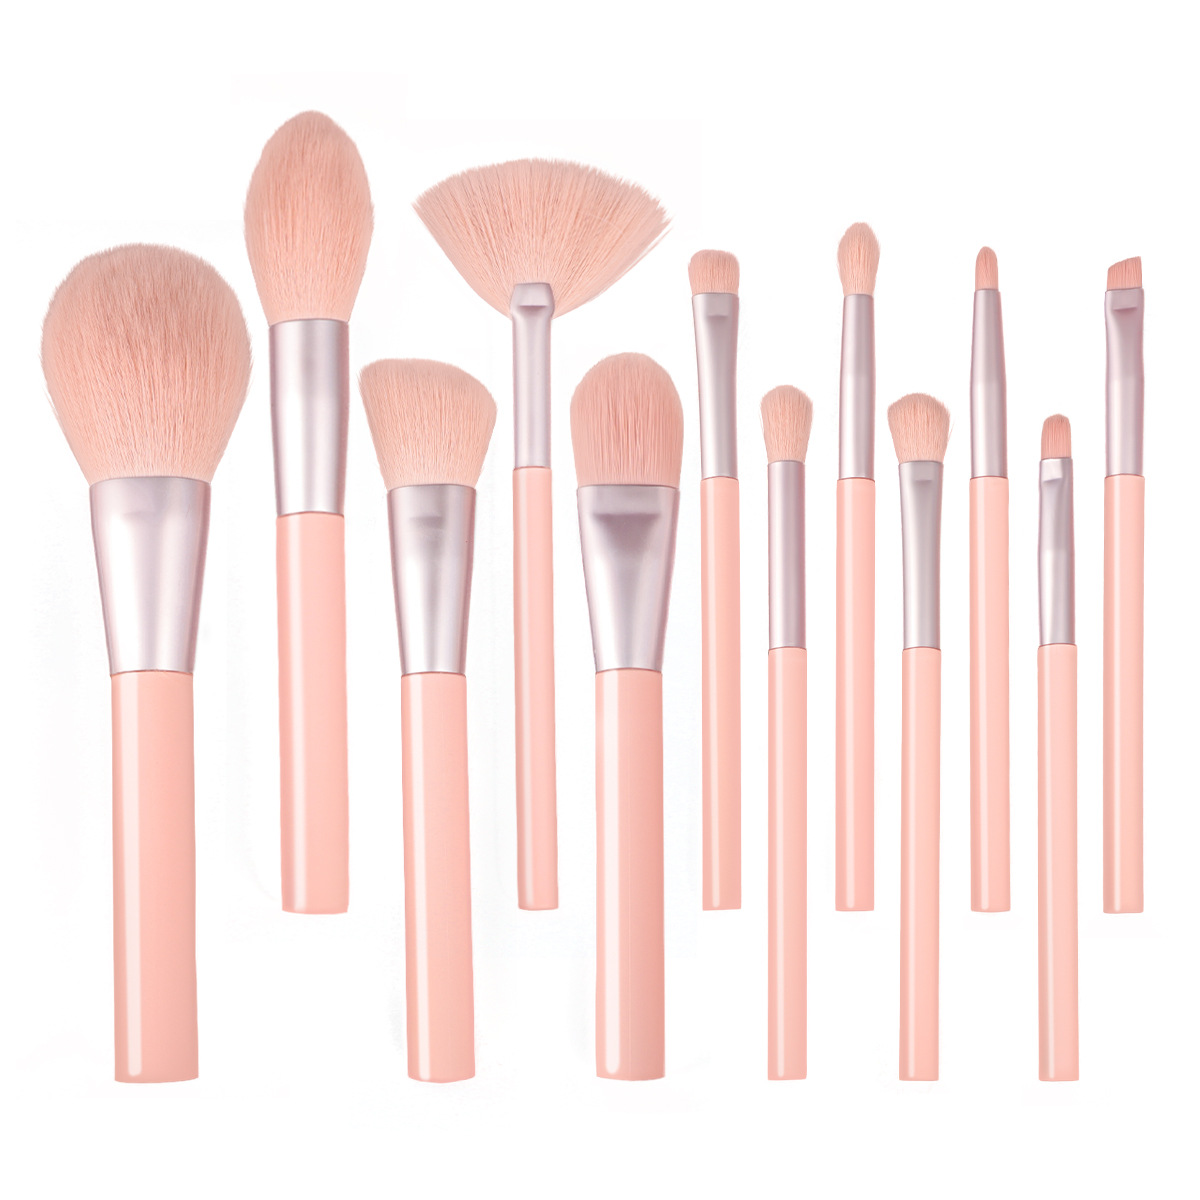 Lepili pilikino hou 12 Pcs Pink Makeup Brush Set Premium Soft Synthetic Hair Makeup Tools for Foundation Concealer Eyesh...